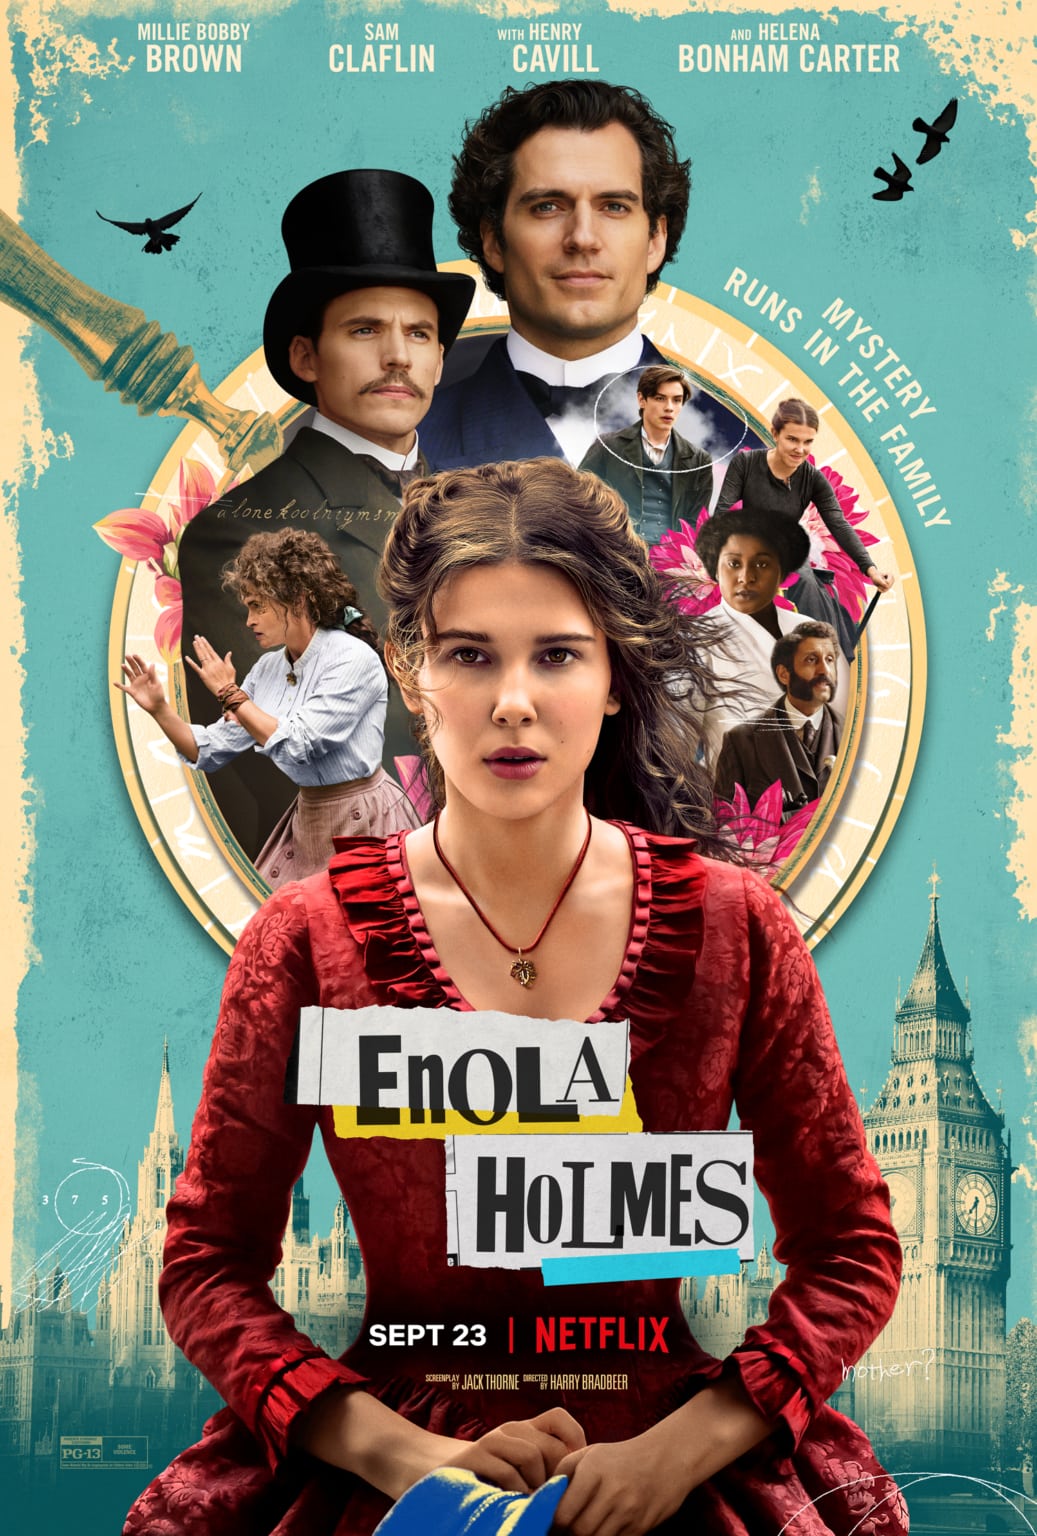 enola holmes movie review essay